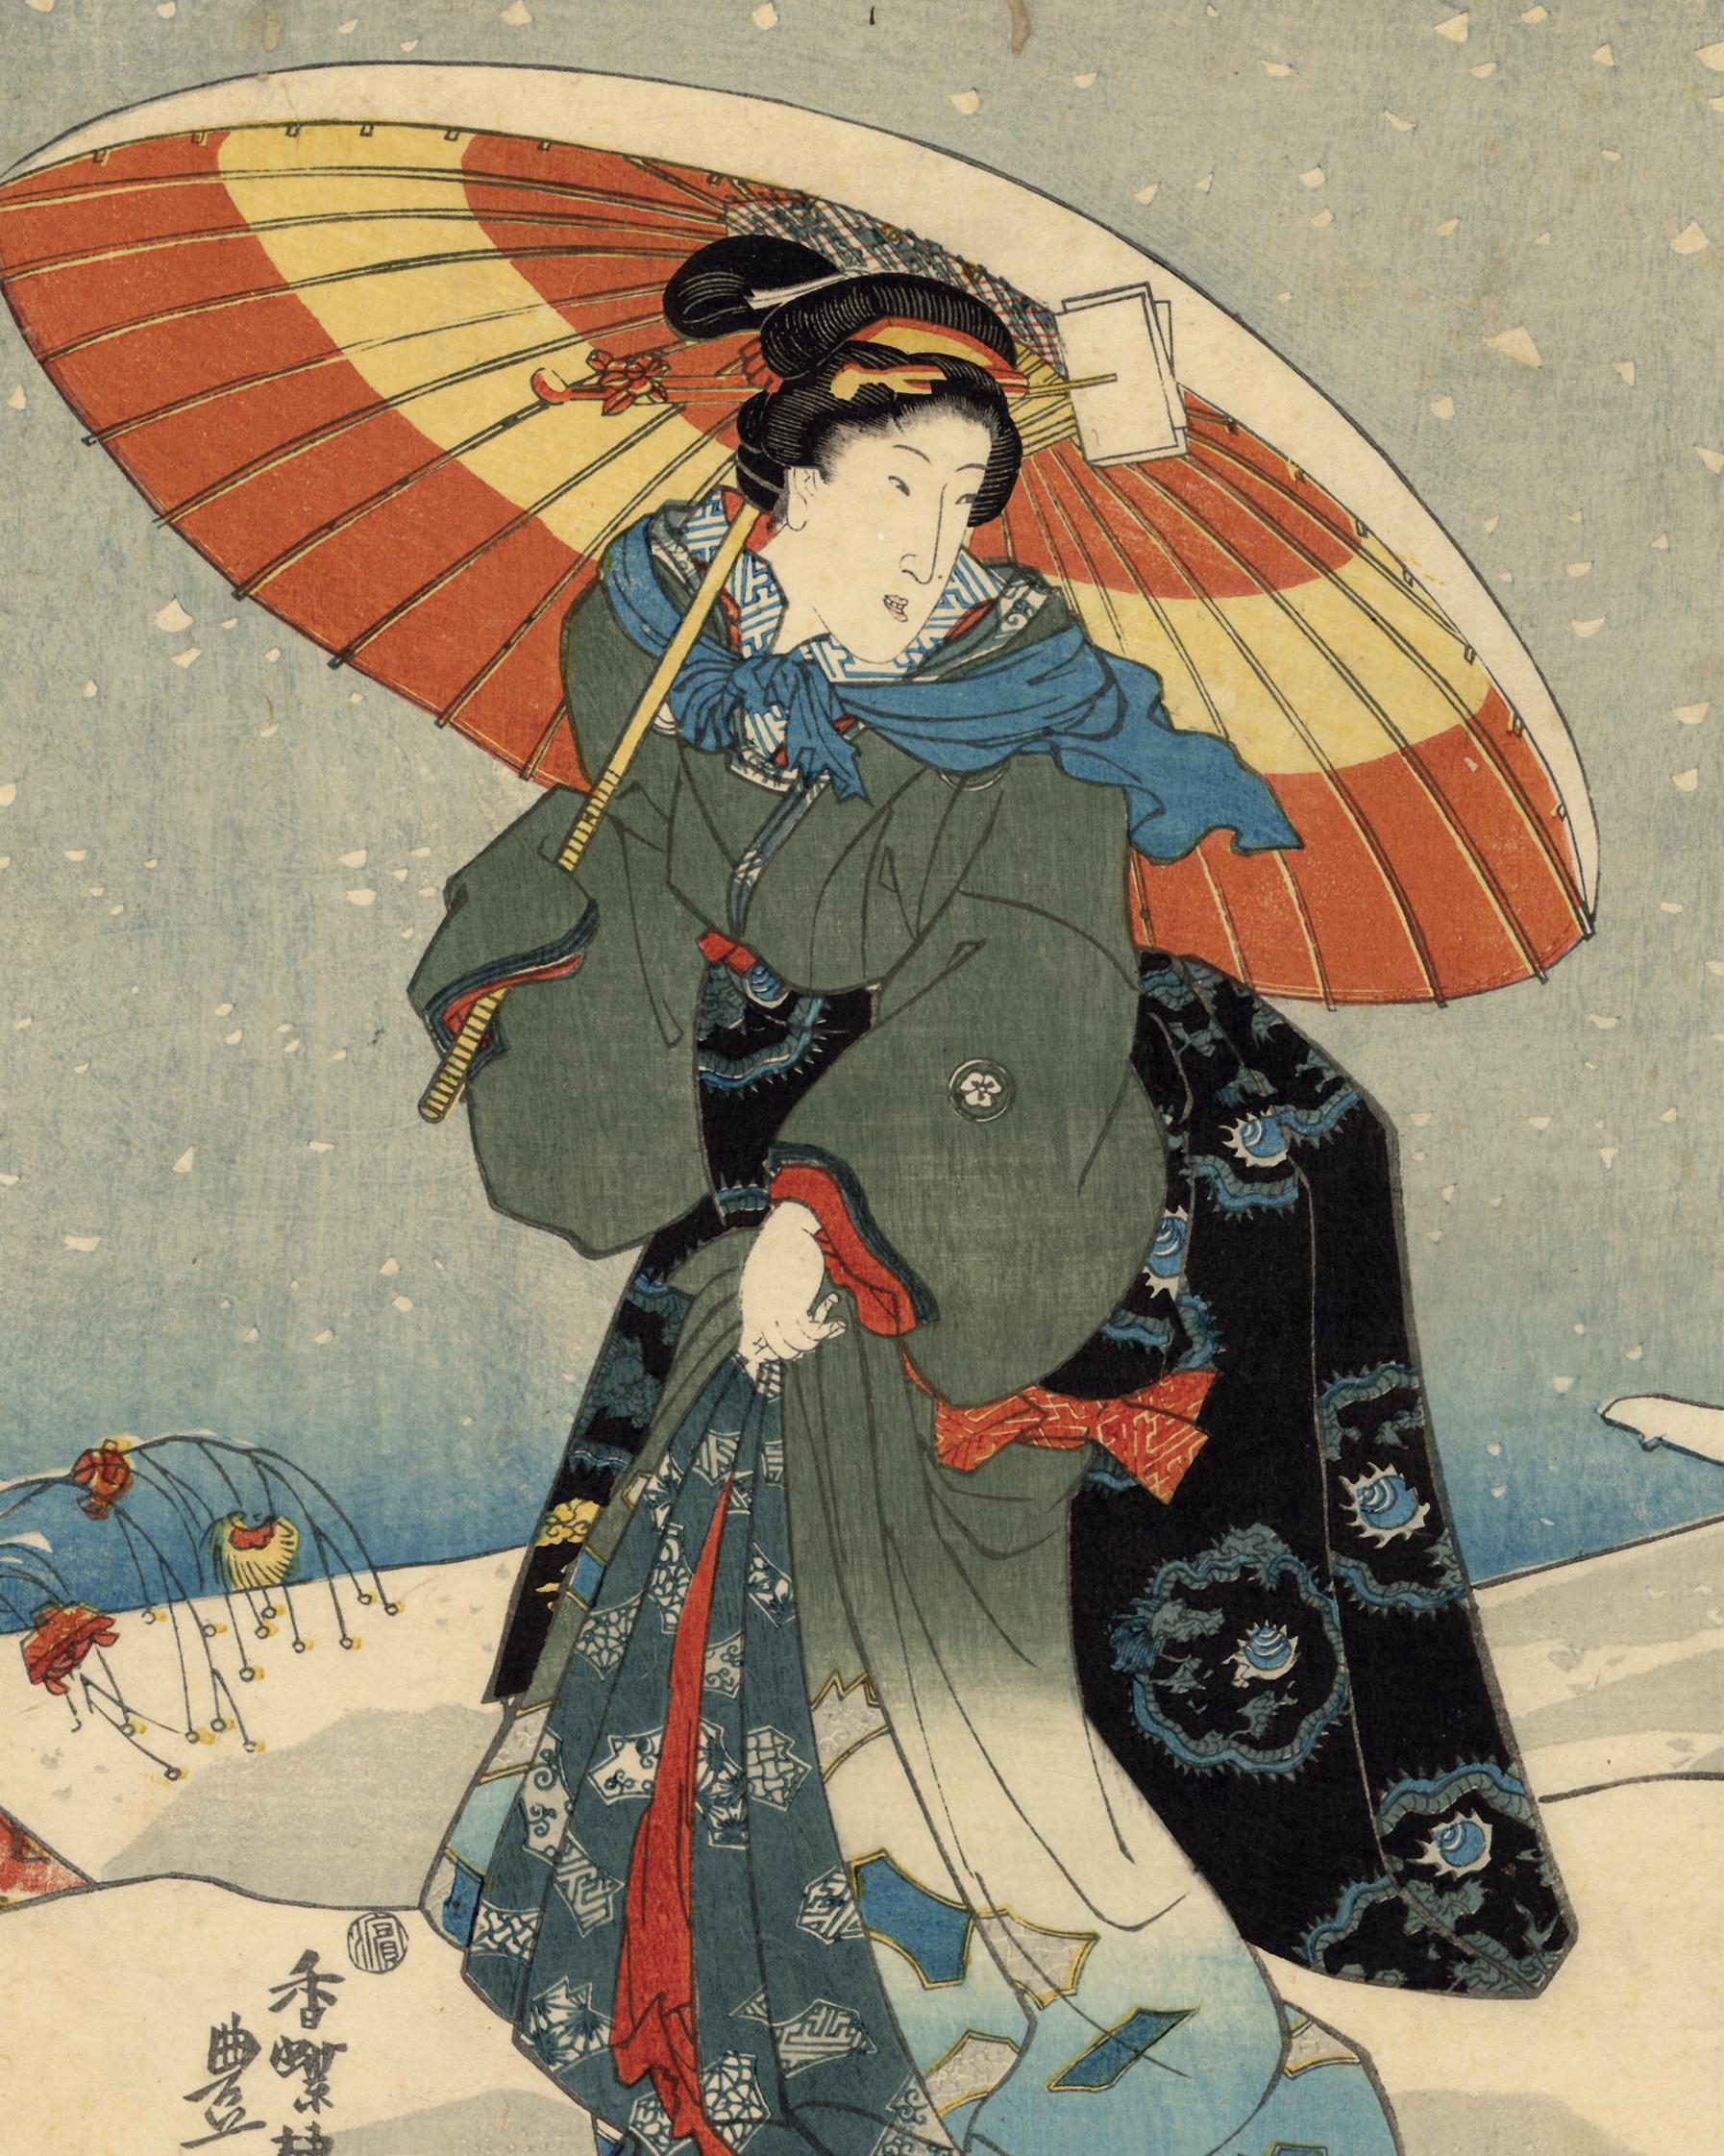 Japanese Beauties With Umbrellas in the Snow Visit the Shinto Shrine - Print by Utagawa Kunisada (Toyokuni III)